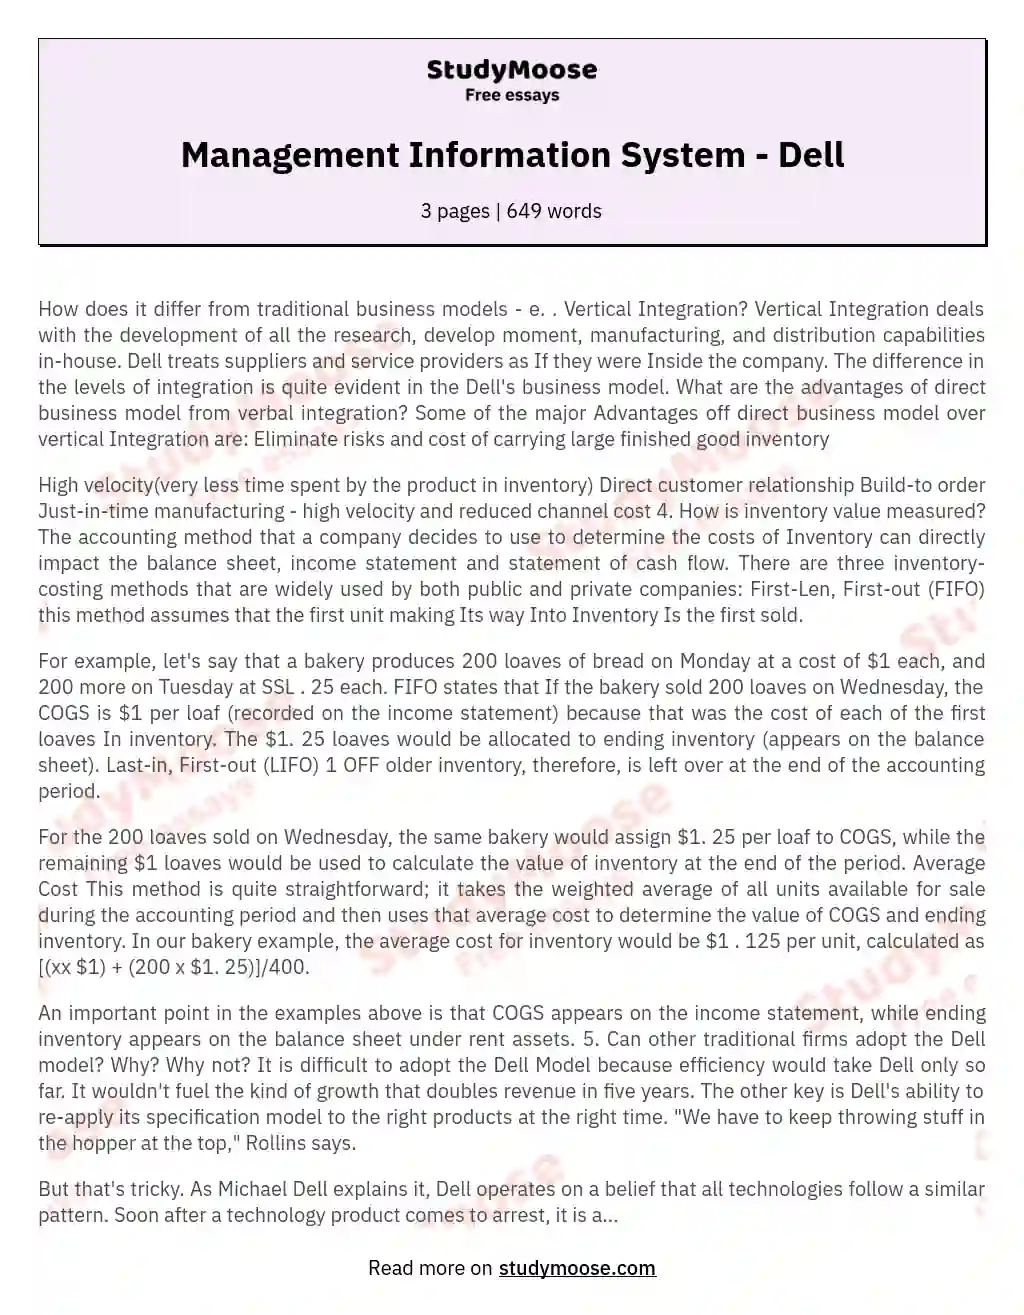 Management Information System - Dell essay